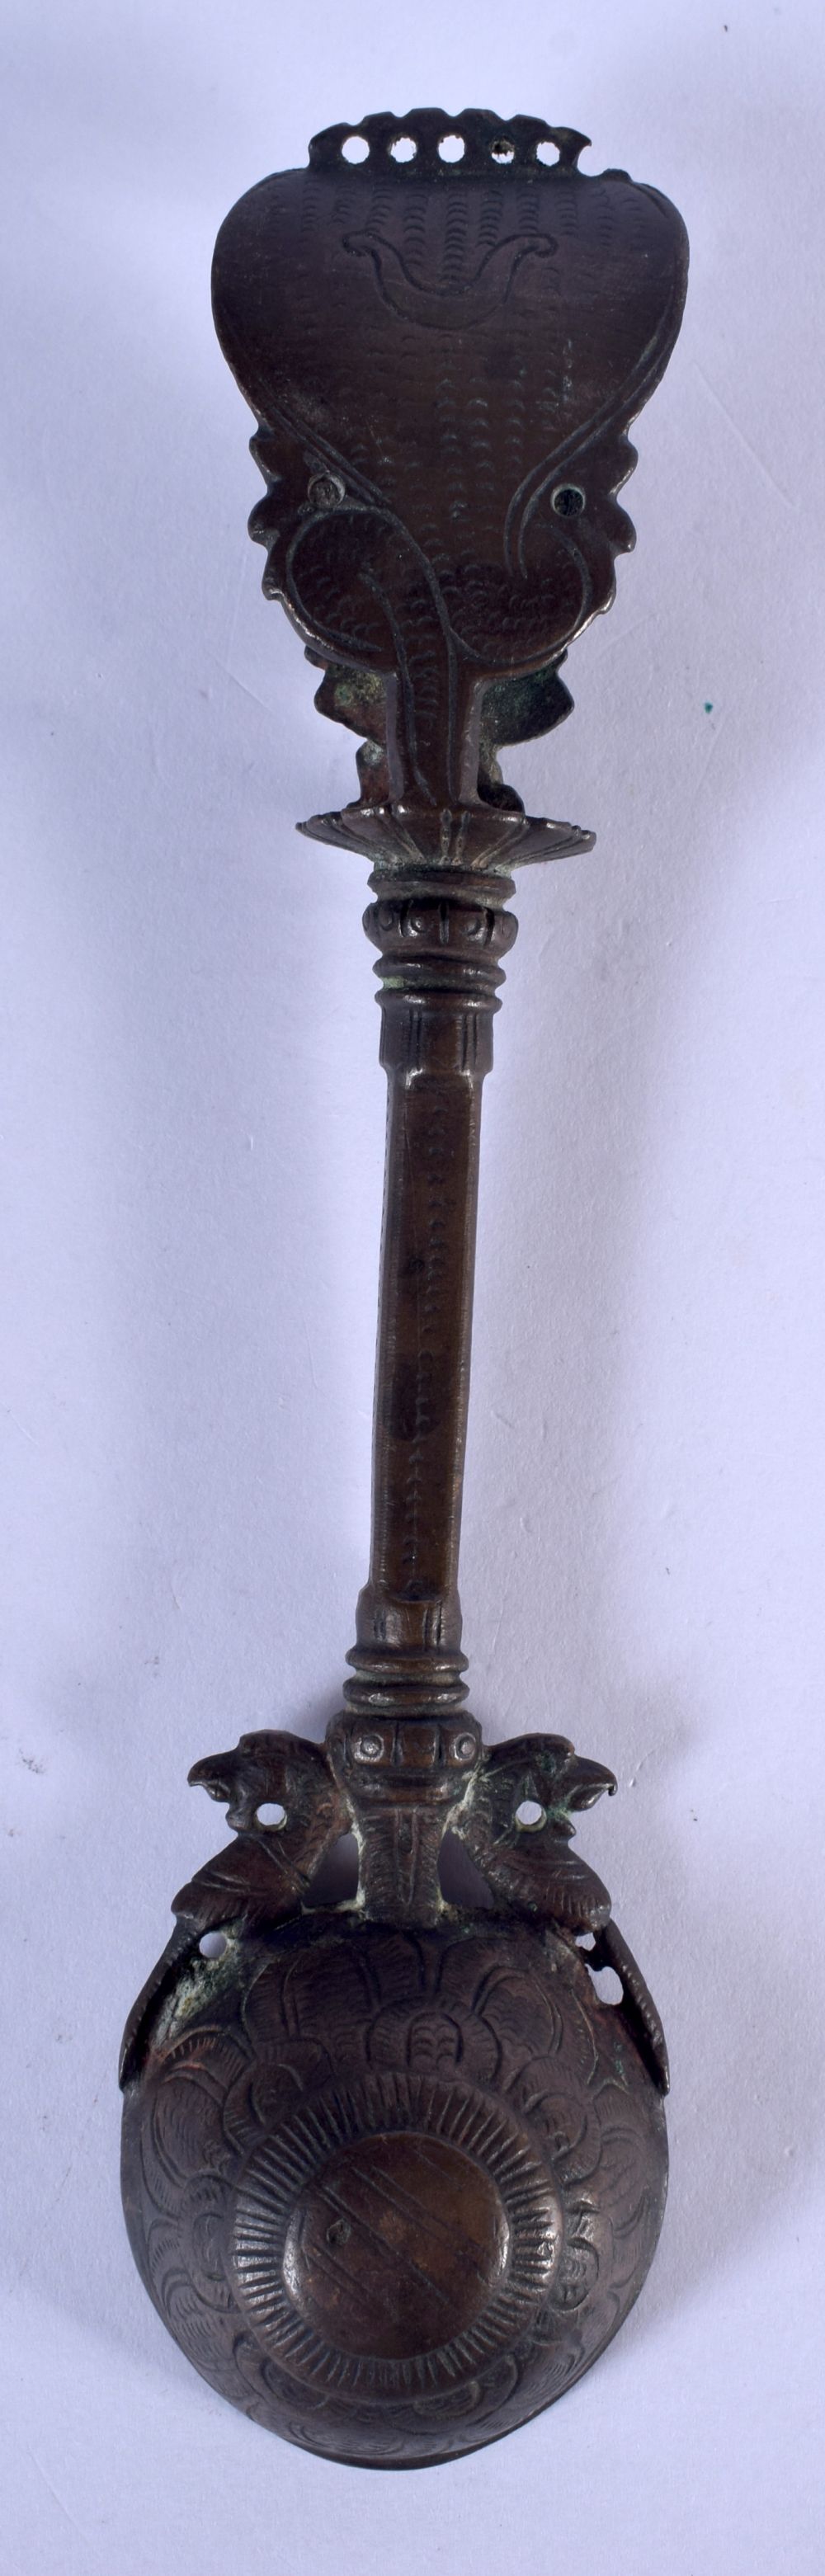 AN 18TH CENTURY INDIAN TIBETAN BRONZE SPOON. 14 cm long. - Image 2 of 2